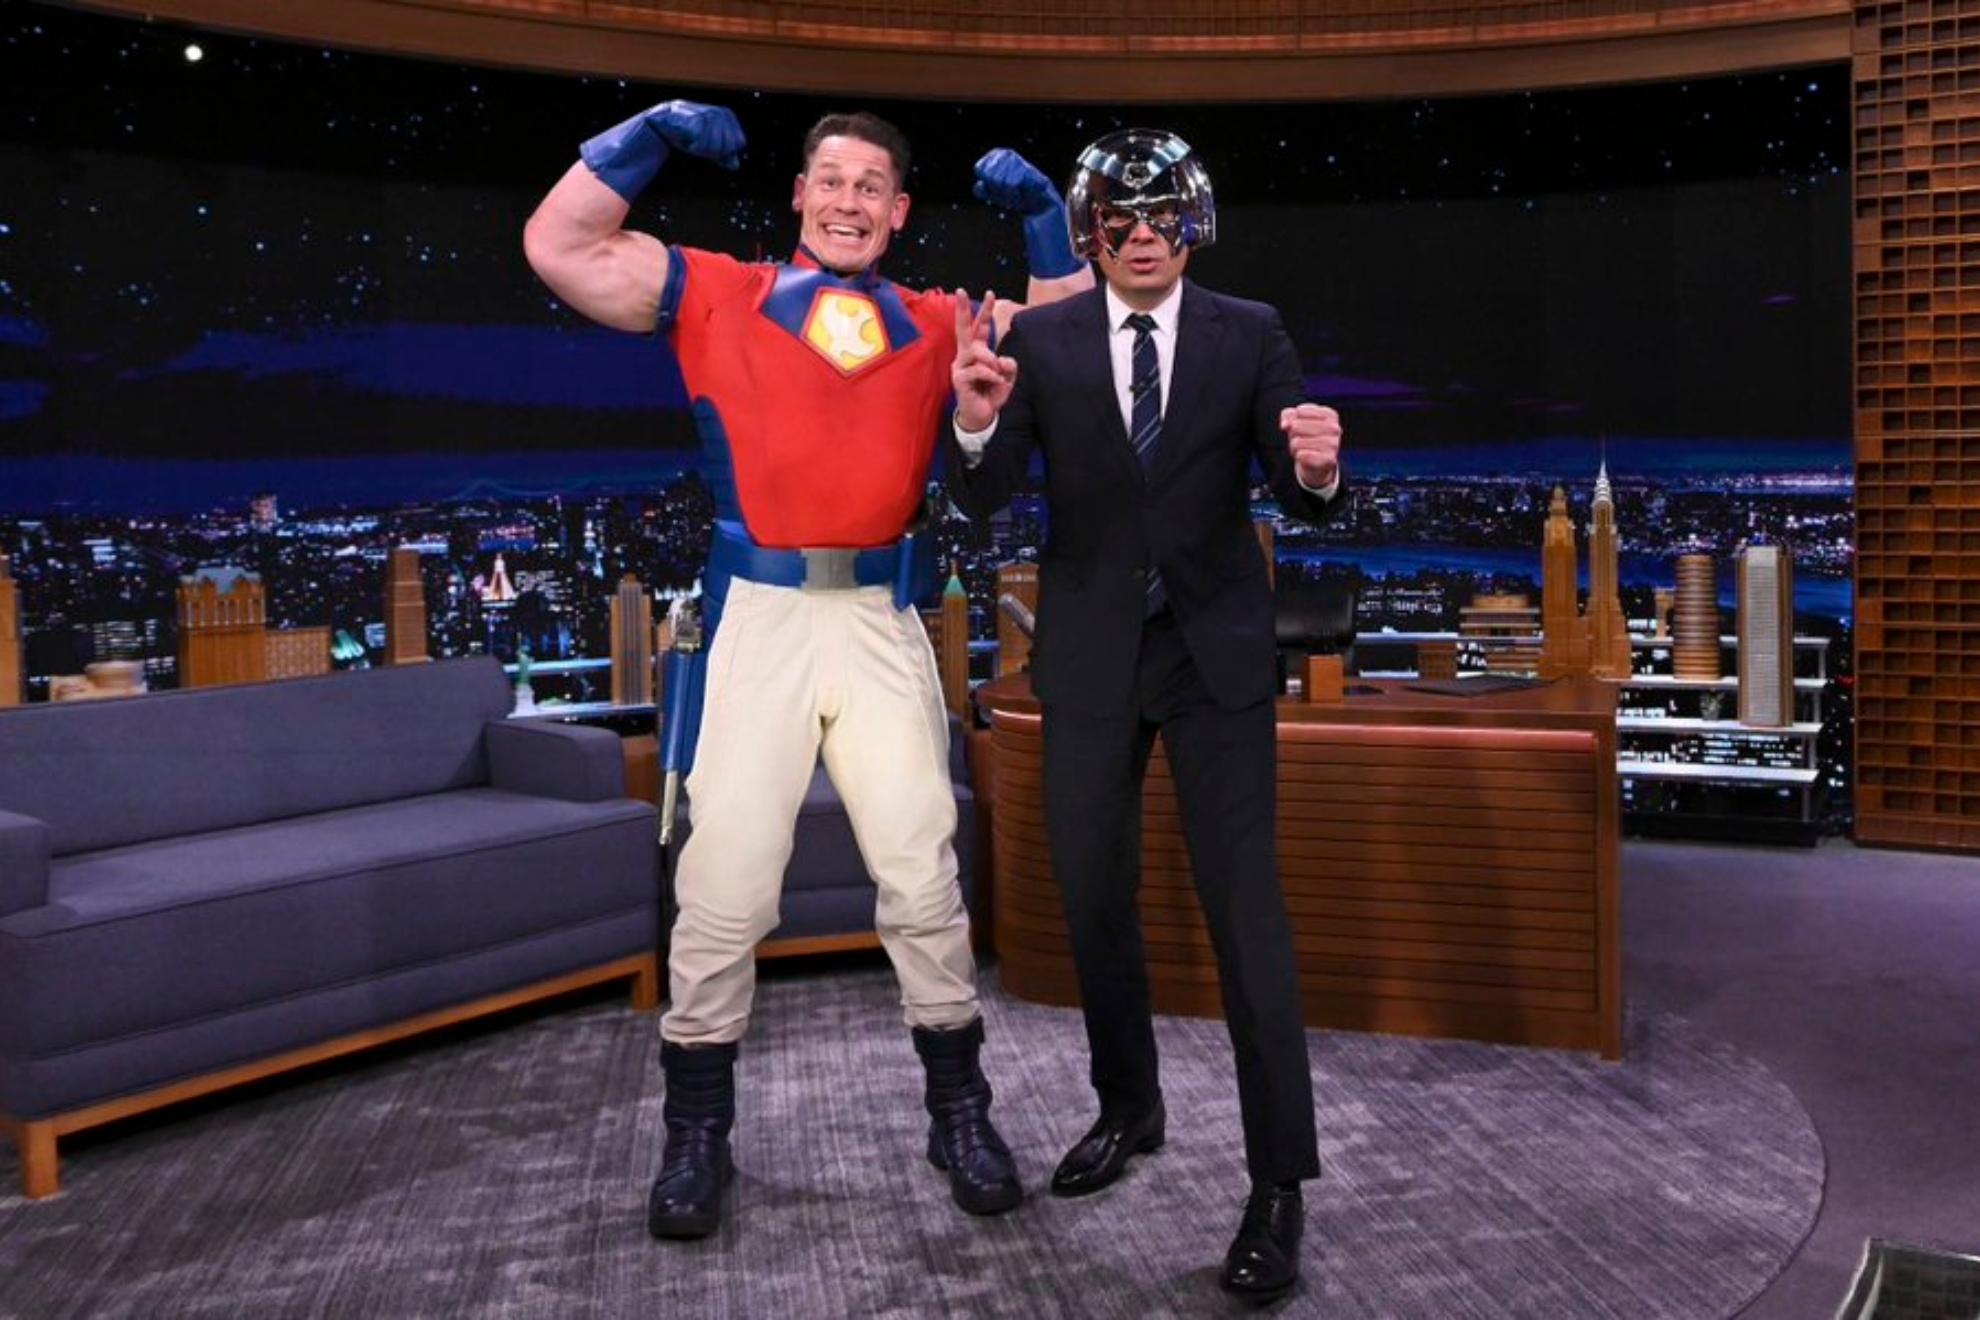 John Cena dressed as Peacemaker visits Jimmy Fallon's Tonight Show.